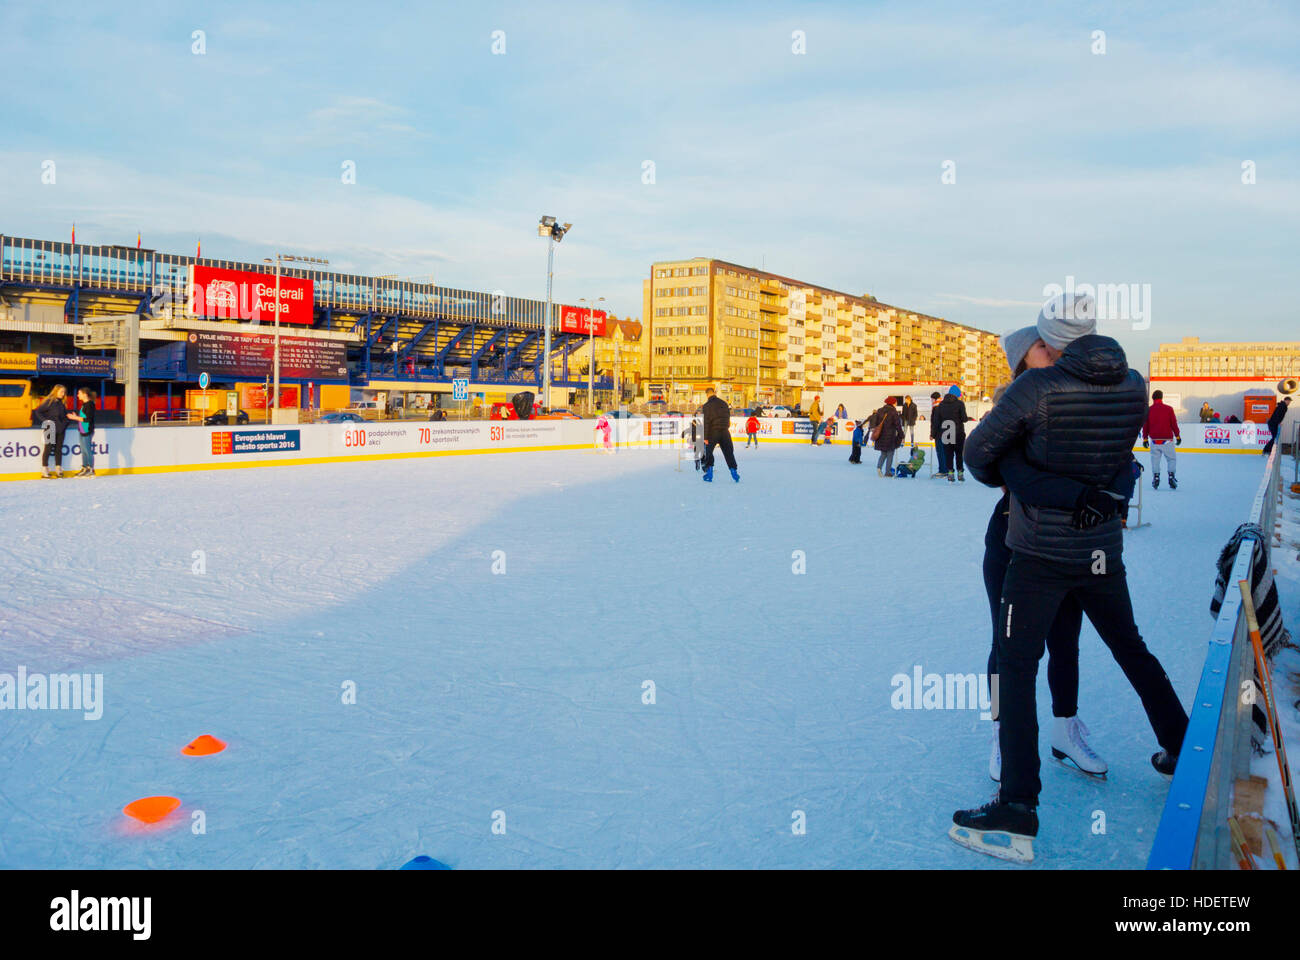 Ice skating rink, Letenska plan, Letna plain, Bubenec, Prague, Czech Republic Stock Photo